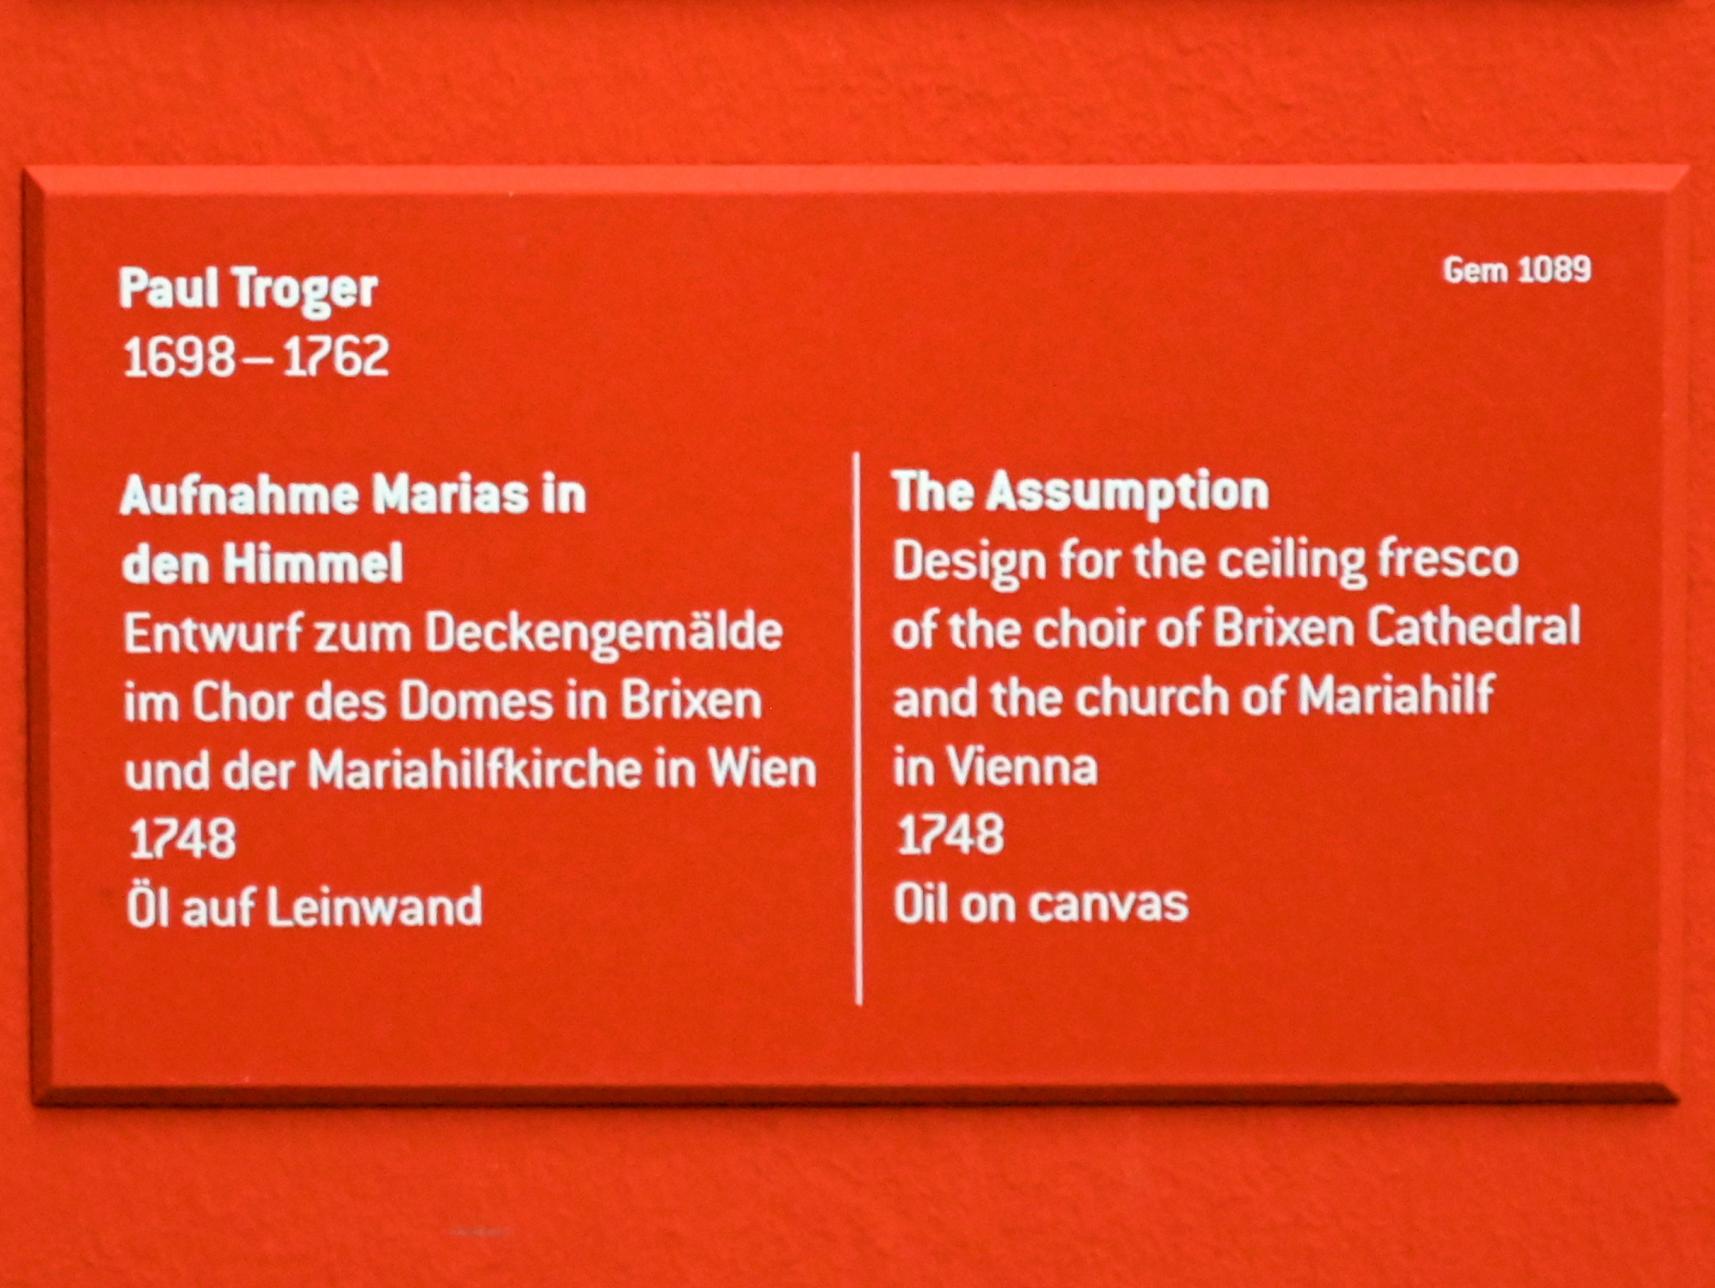 Paul Troger (1727–1750), Aufnahme Marias in den Himmel, Brixen, Dom Mariae Aufnahme in den Himmel und St. Kassian, jetzt Innsbruck, Tiroler Landesmuseum, Ferdinandeum, Saal 3, 1748, Bild 2/2